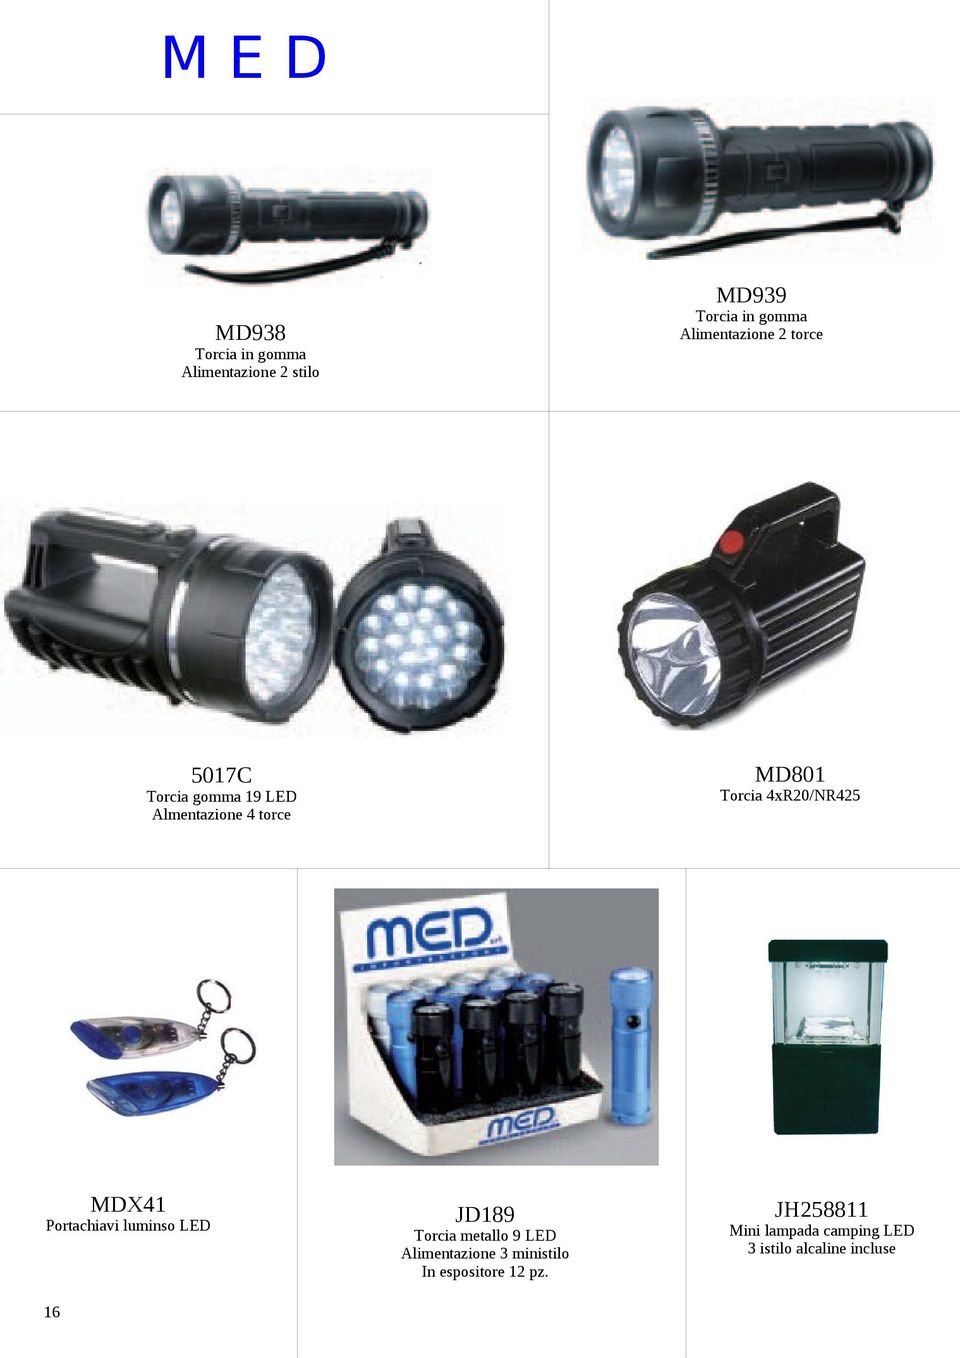 Almentazione 4 torce MDX41 Portachiavi luminso LED 16 JD189 Torcia metallo 9 LED